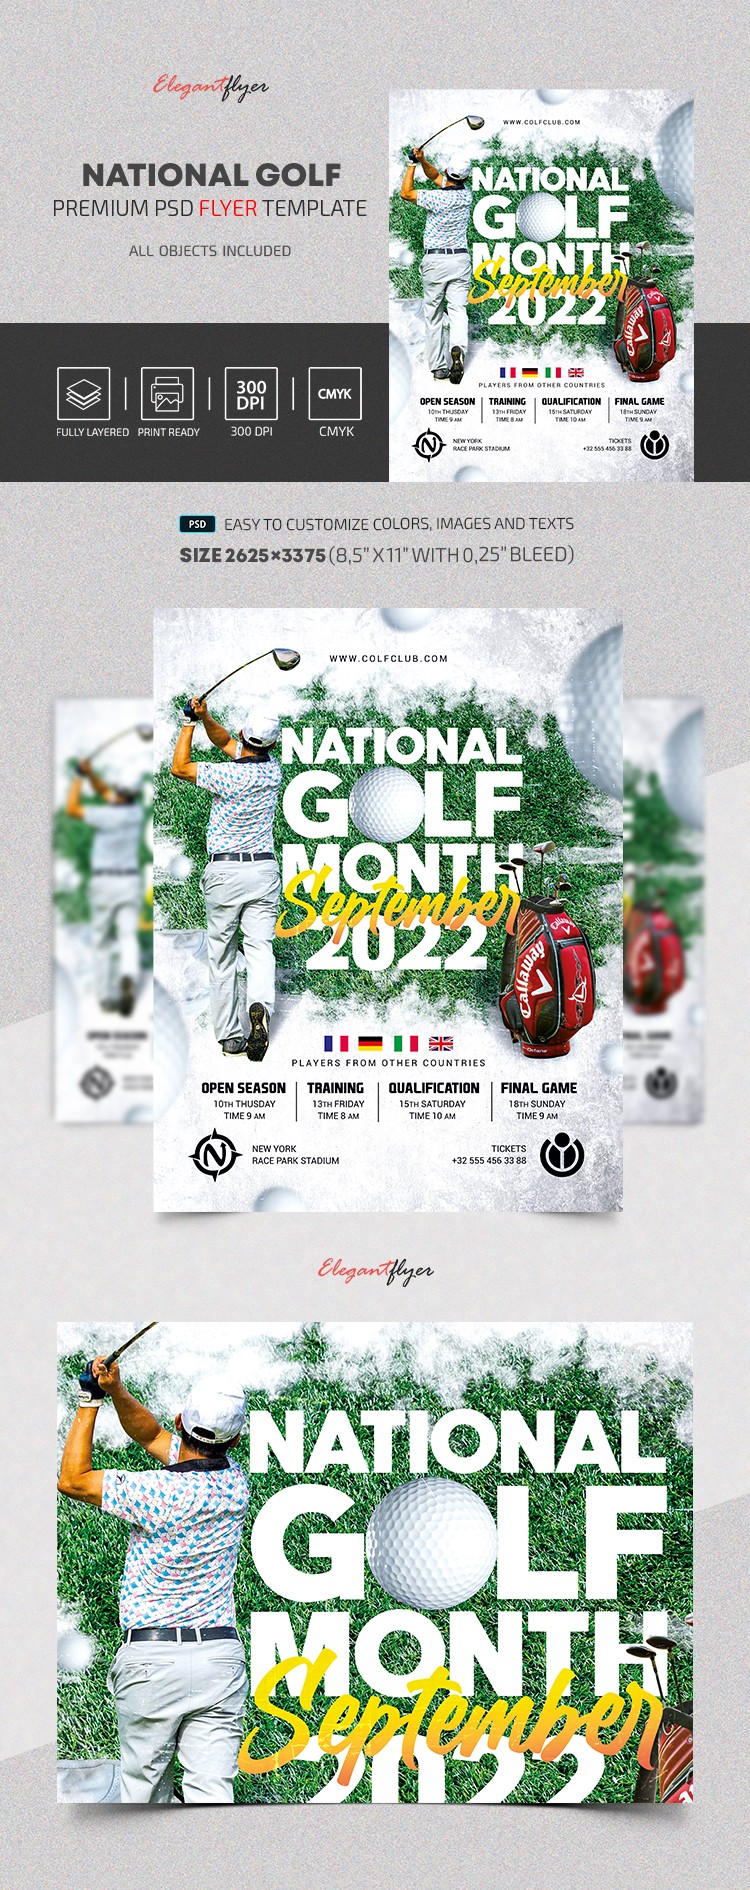 National Golf Month Flyer by ElegantFlyer